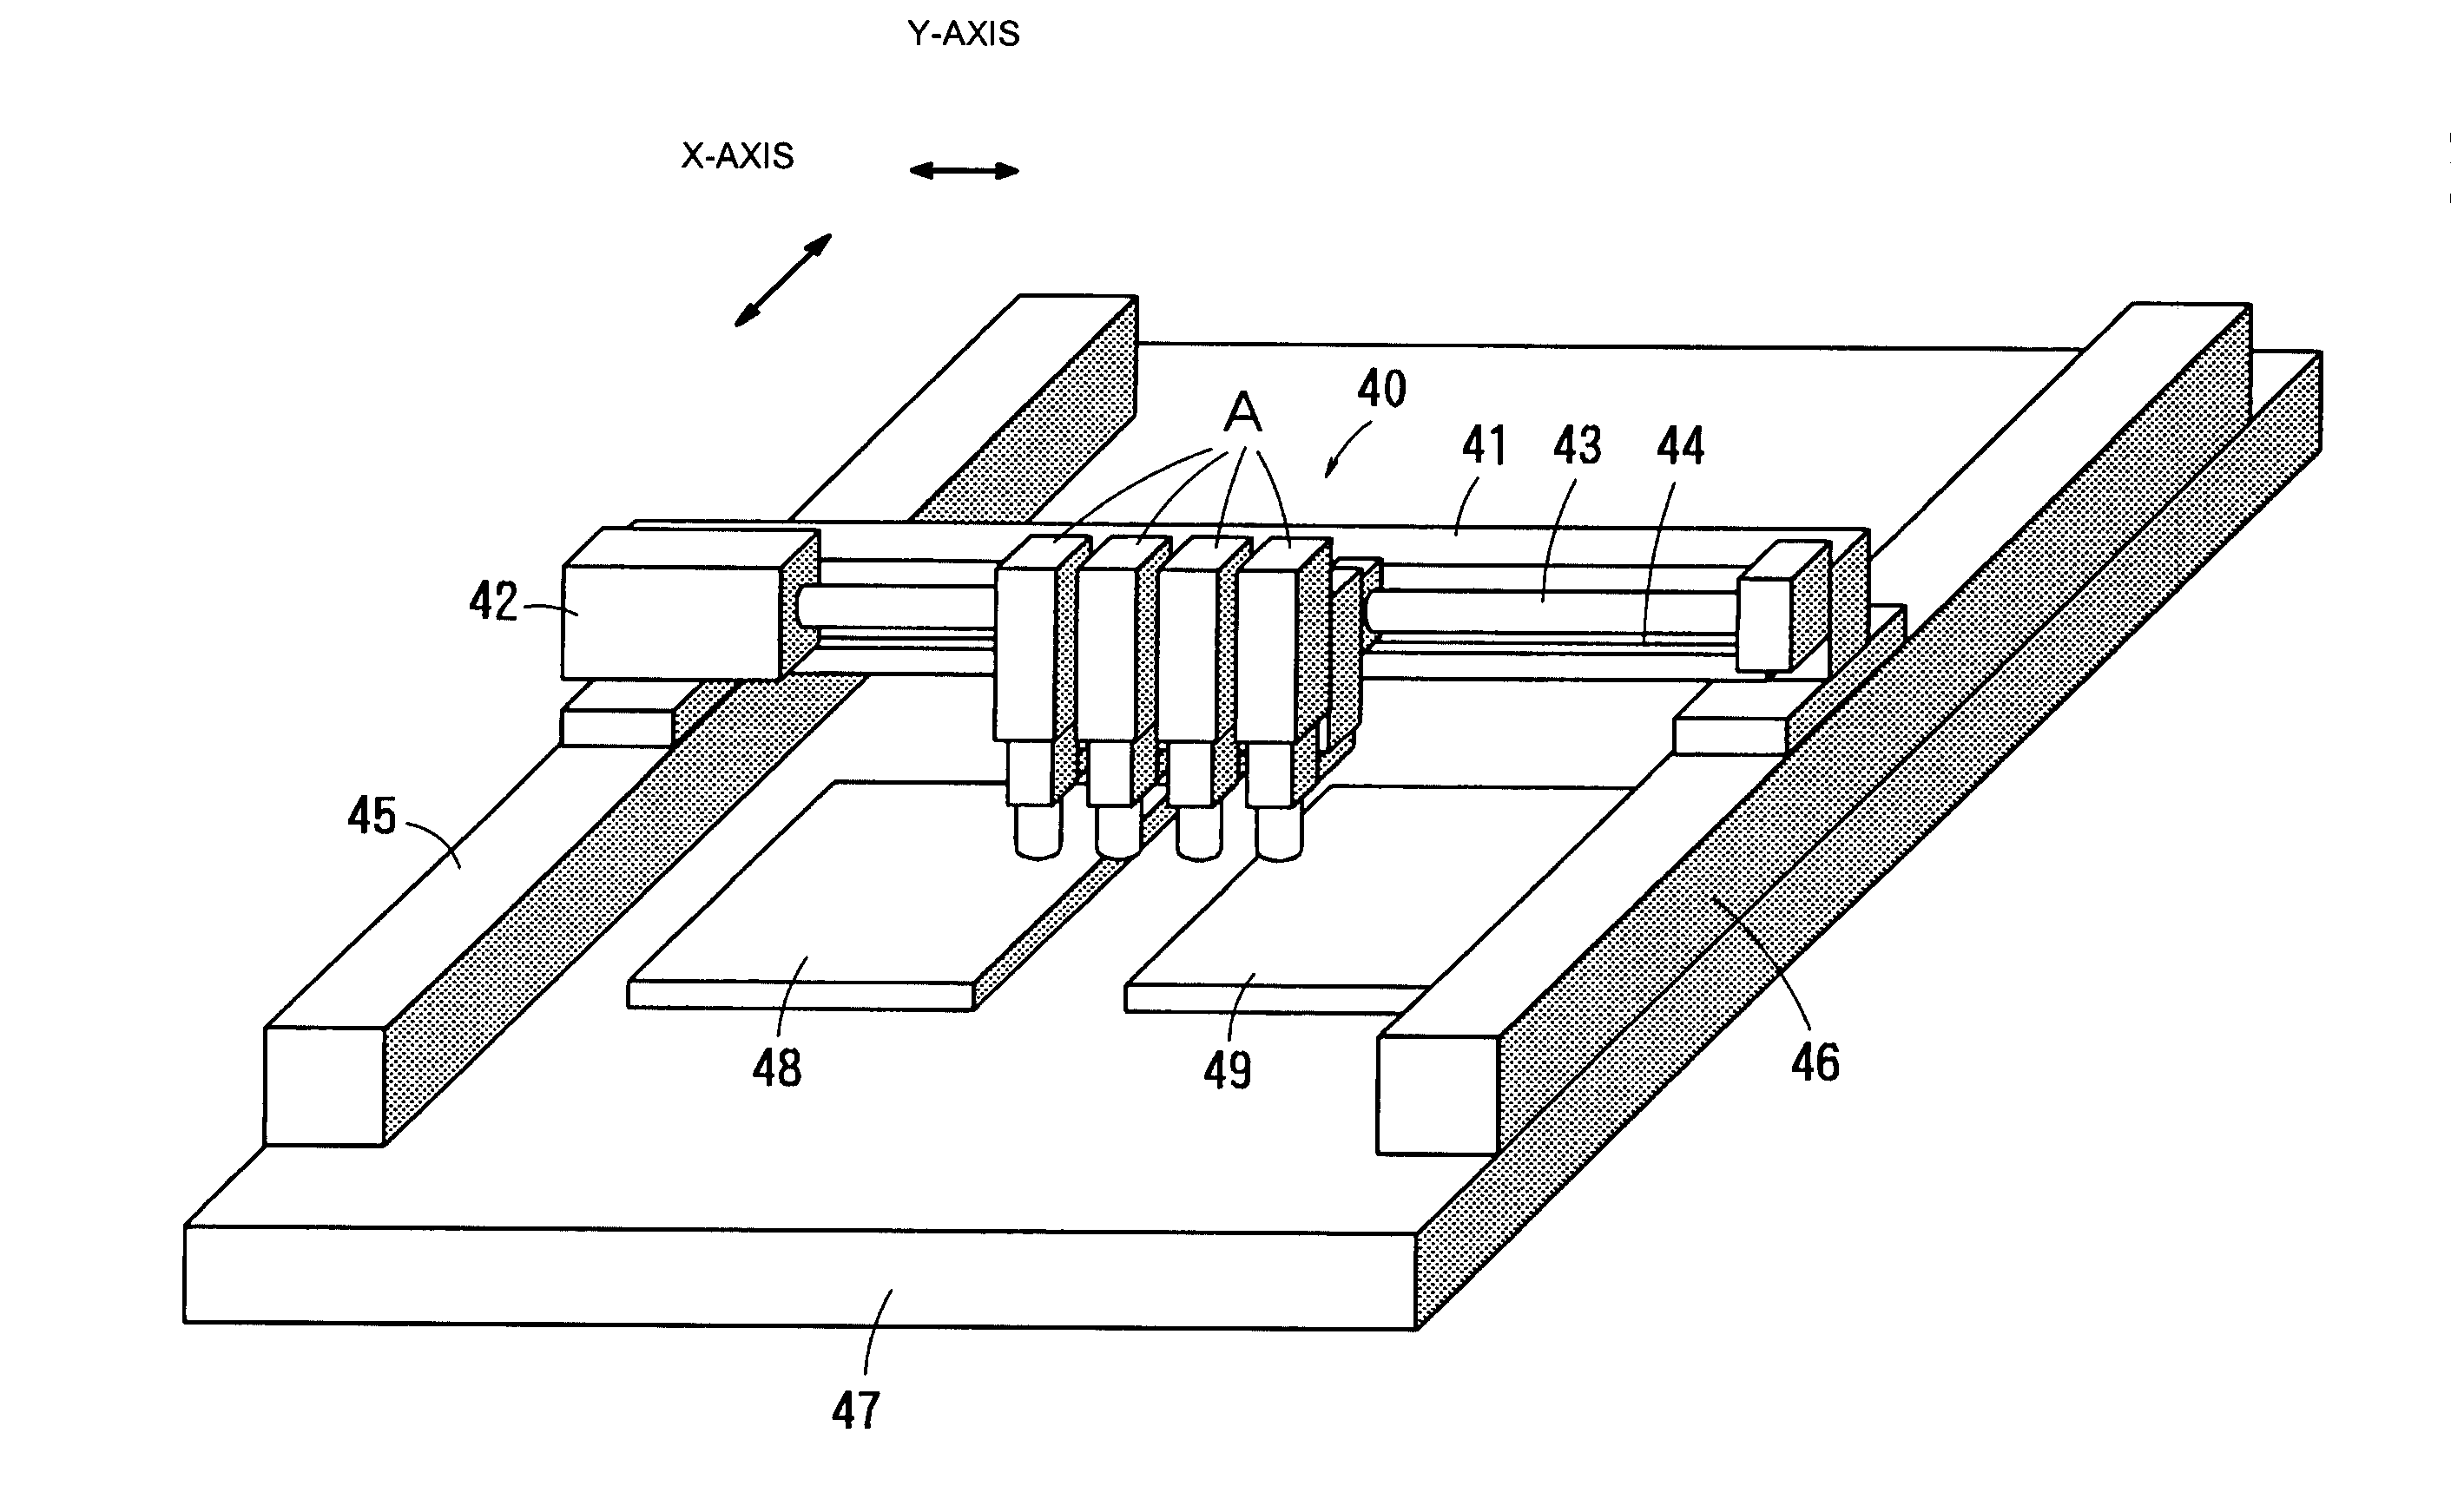 Component-placing apparatus